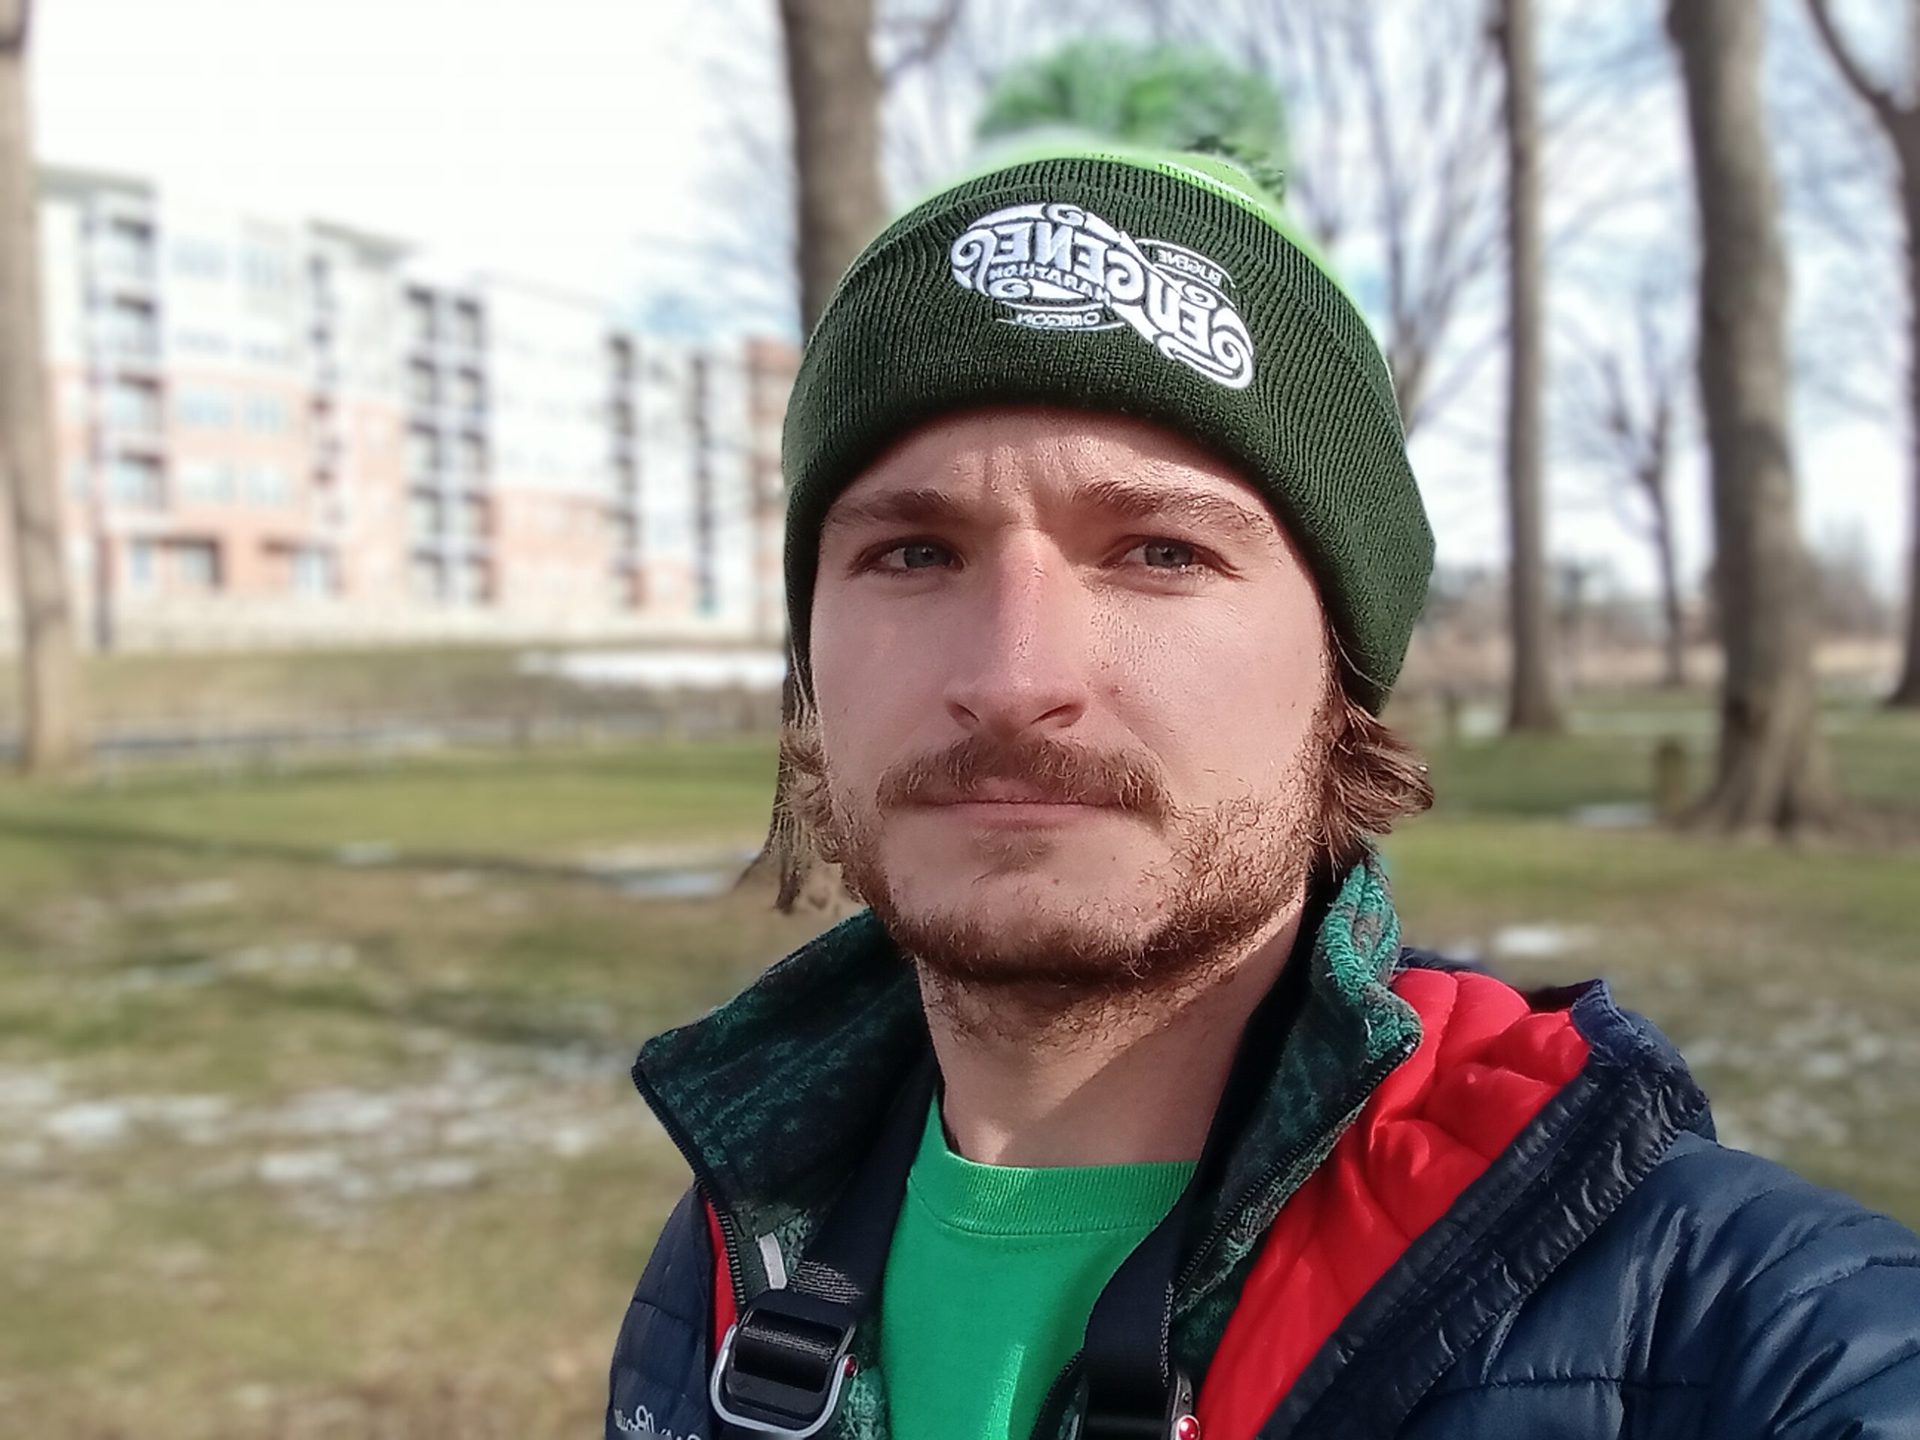 Galaxy A03S肖像Selfie户外一个男人穿着绿色帽子，绿色T恤和红色和黑色外套，与建筑物和树在他身后可见。